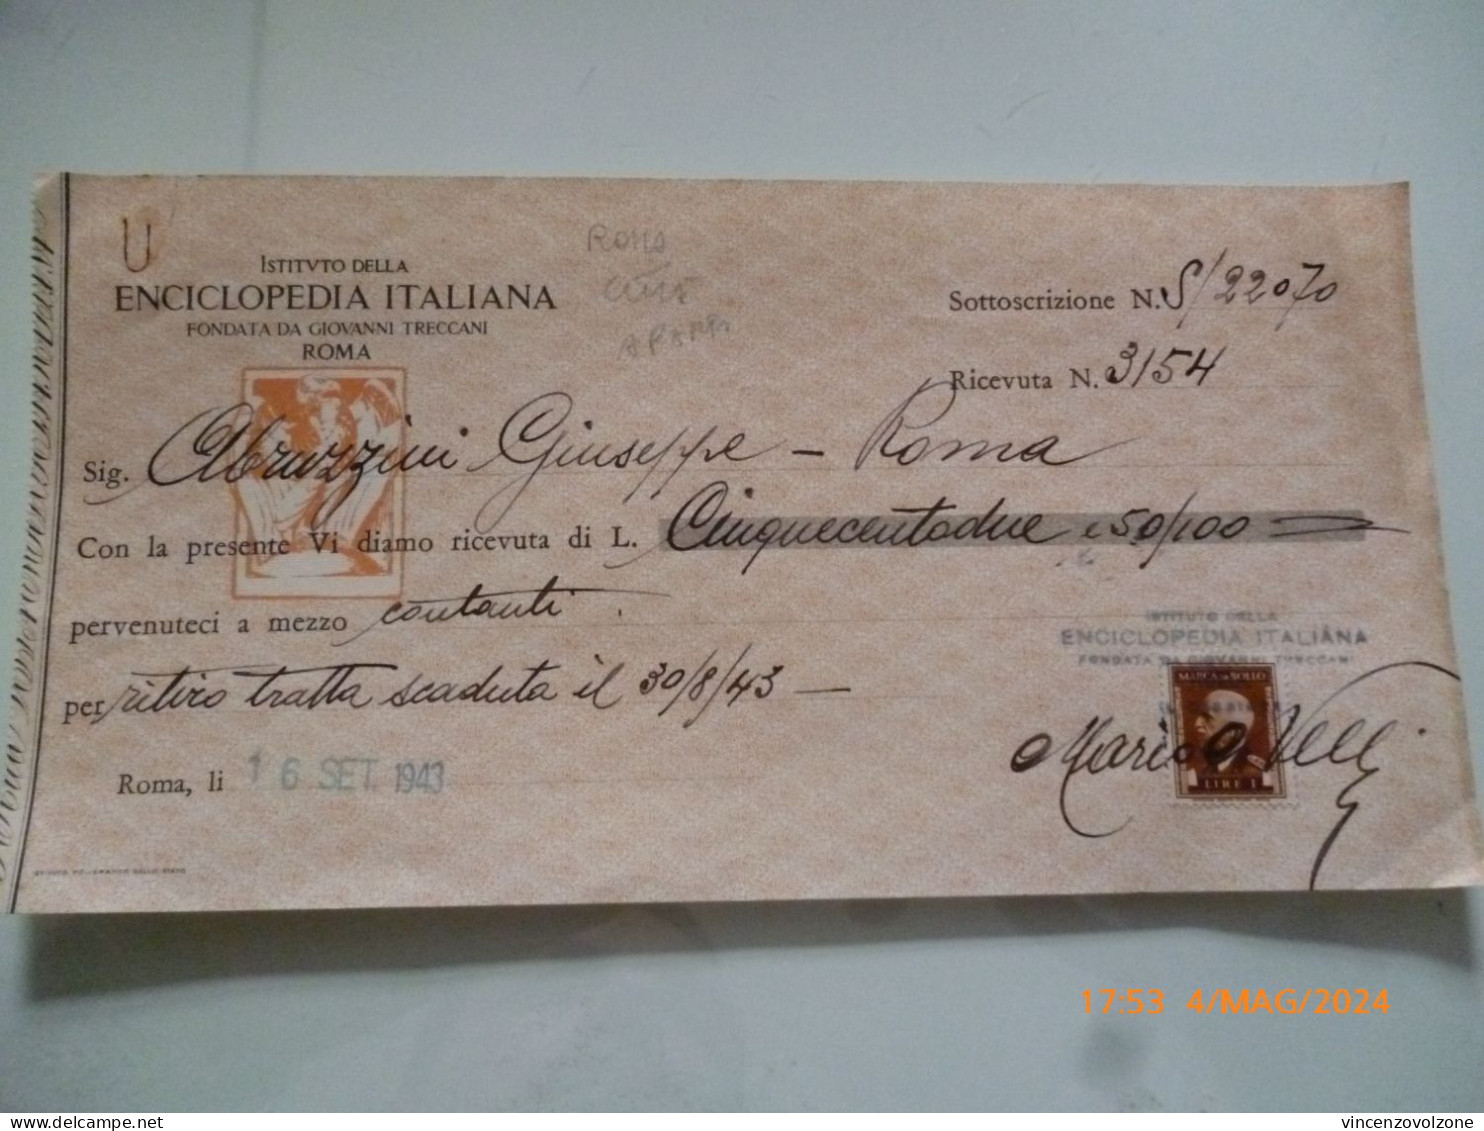 Ricevuta "ENCICLOPEDIA ITALIANA TRECCANI ROMA" 1943 - Italie